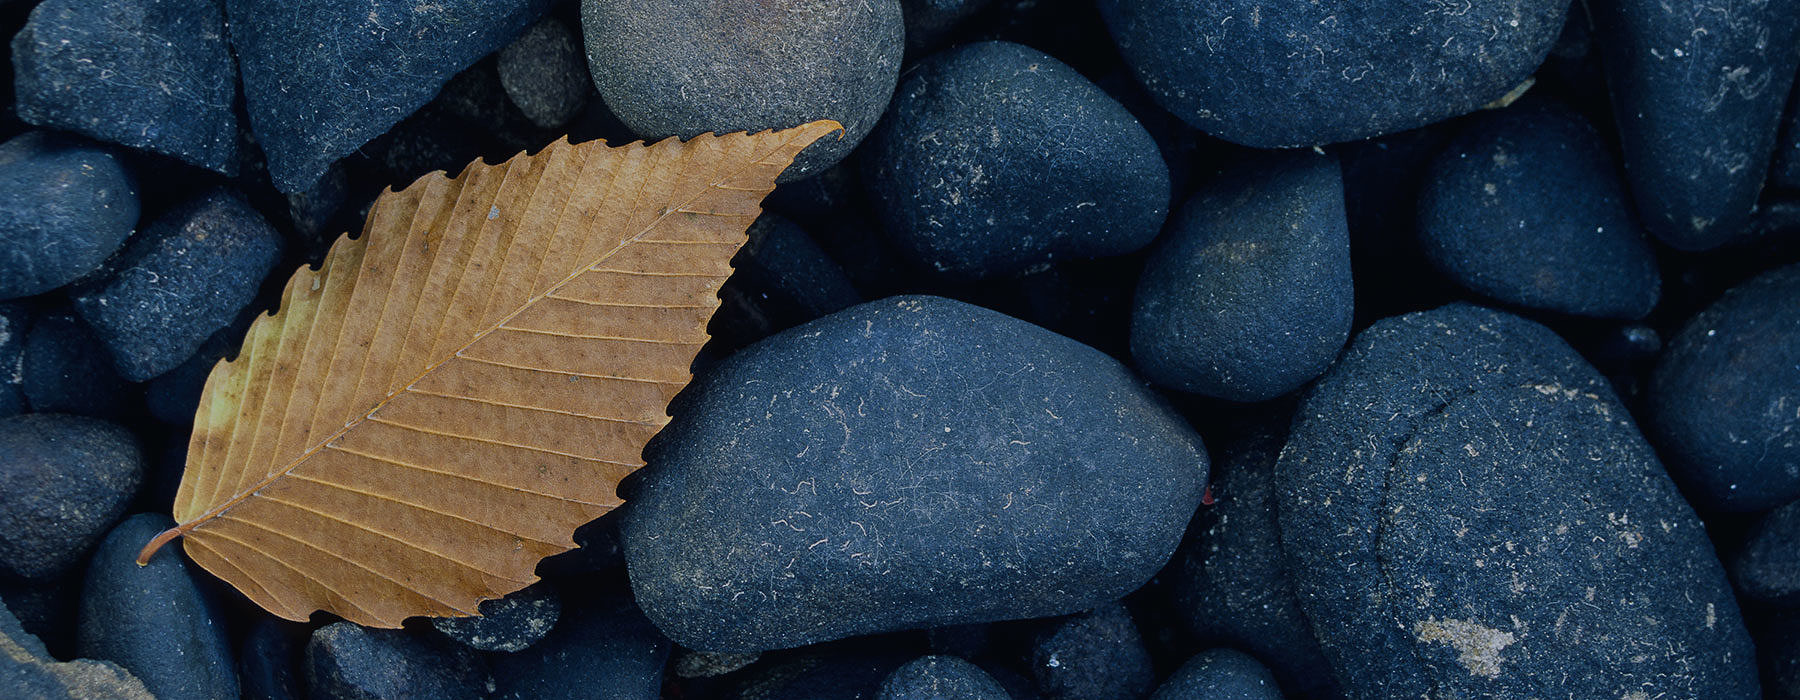 Fallen leaf on stones © Kurt Budliger Photography